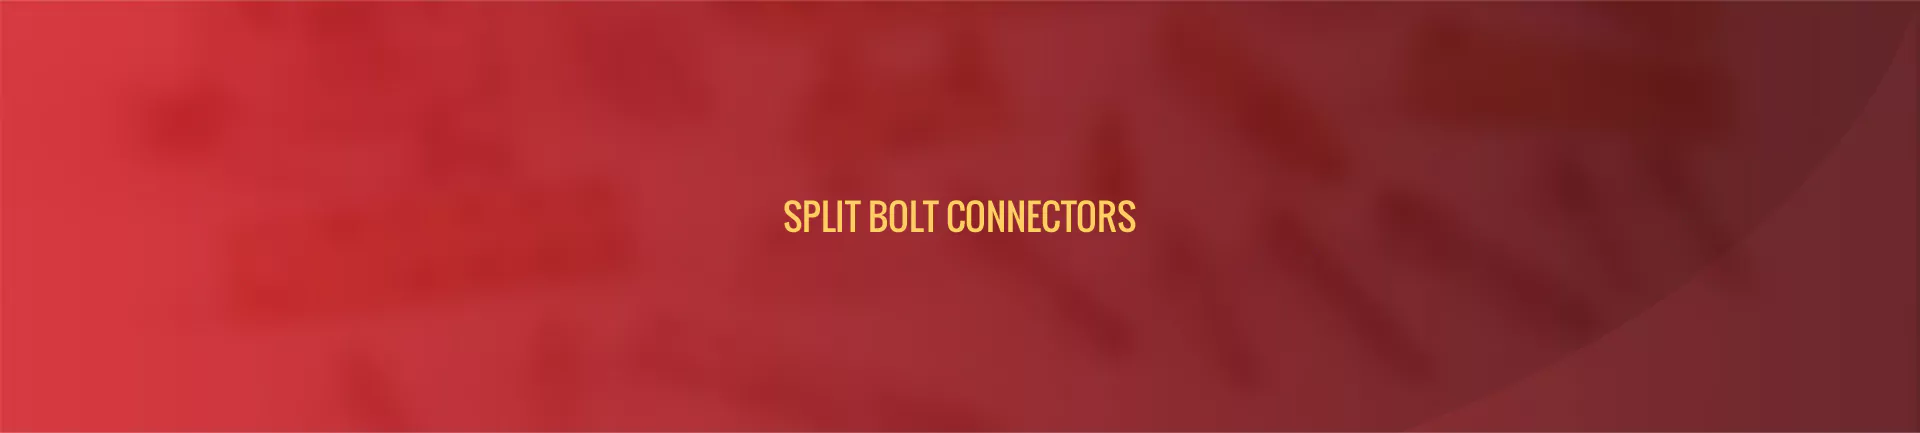 split-bolt-connectors-banner